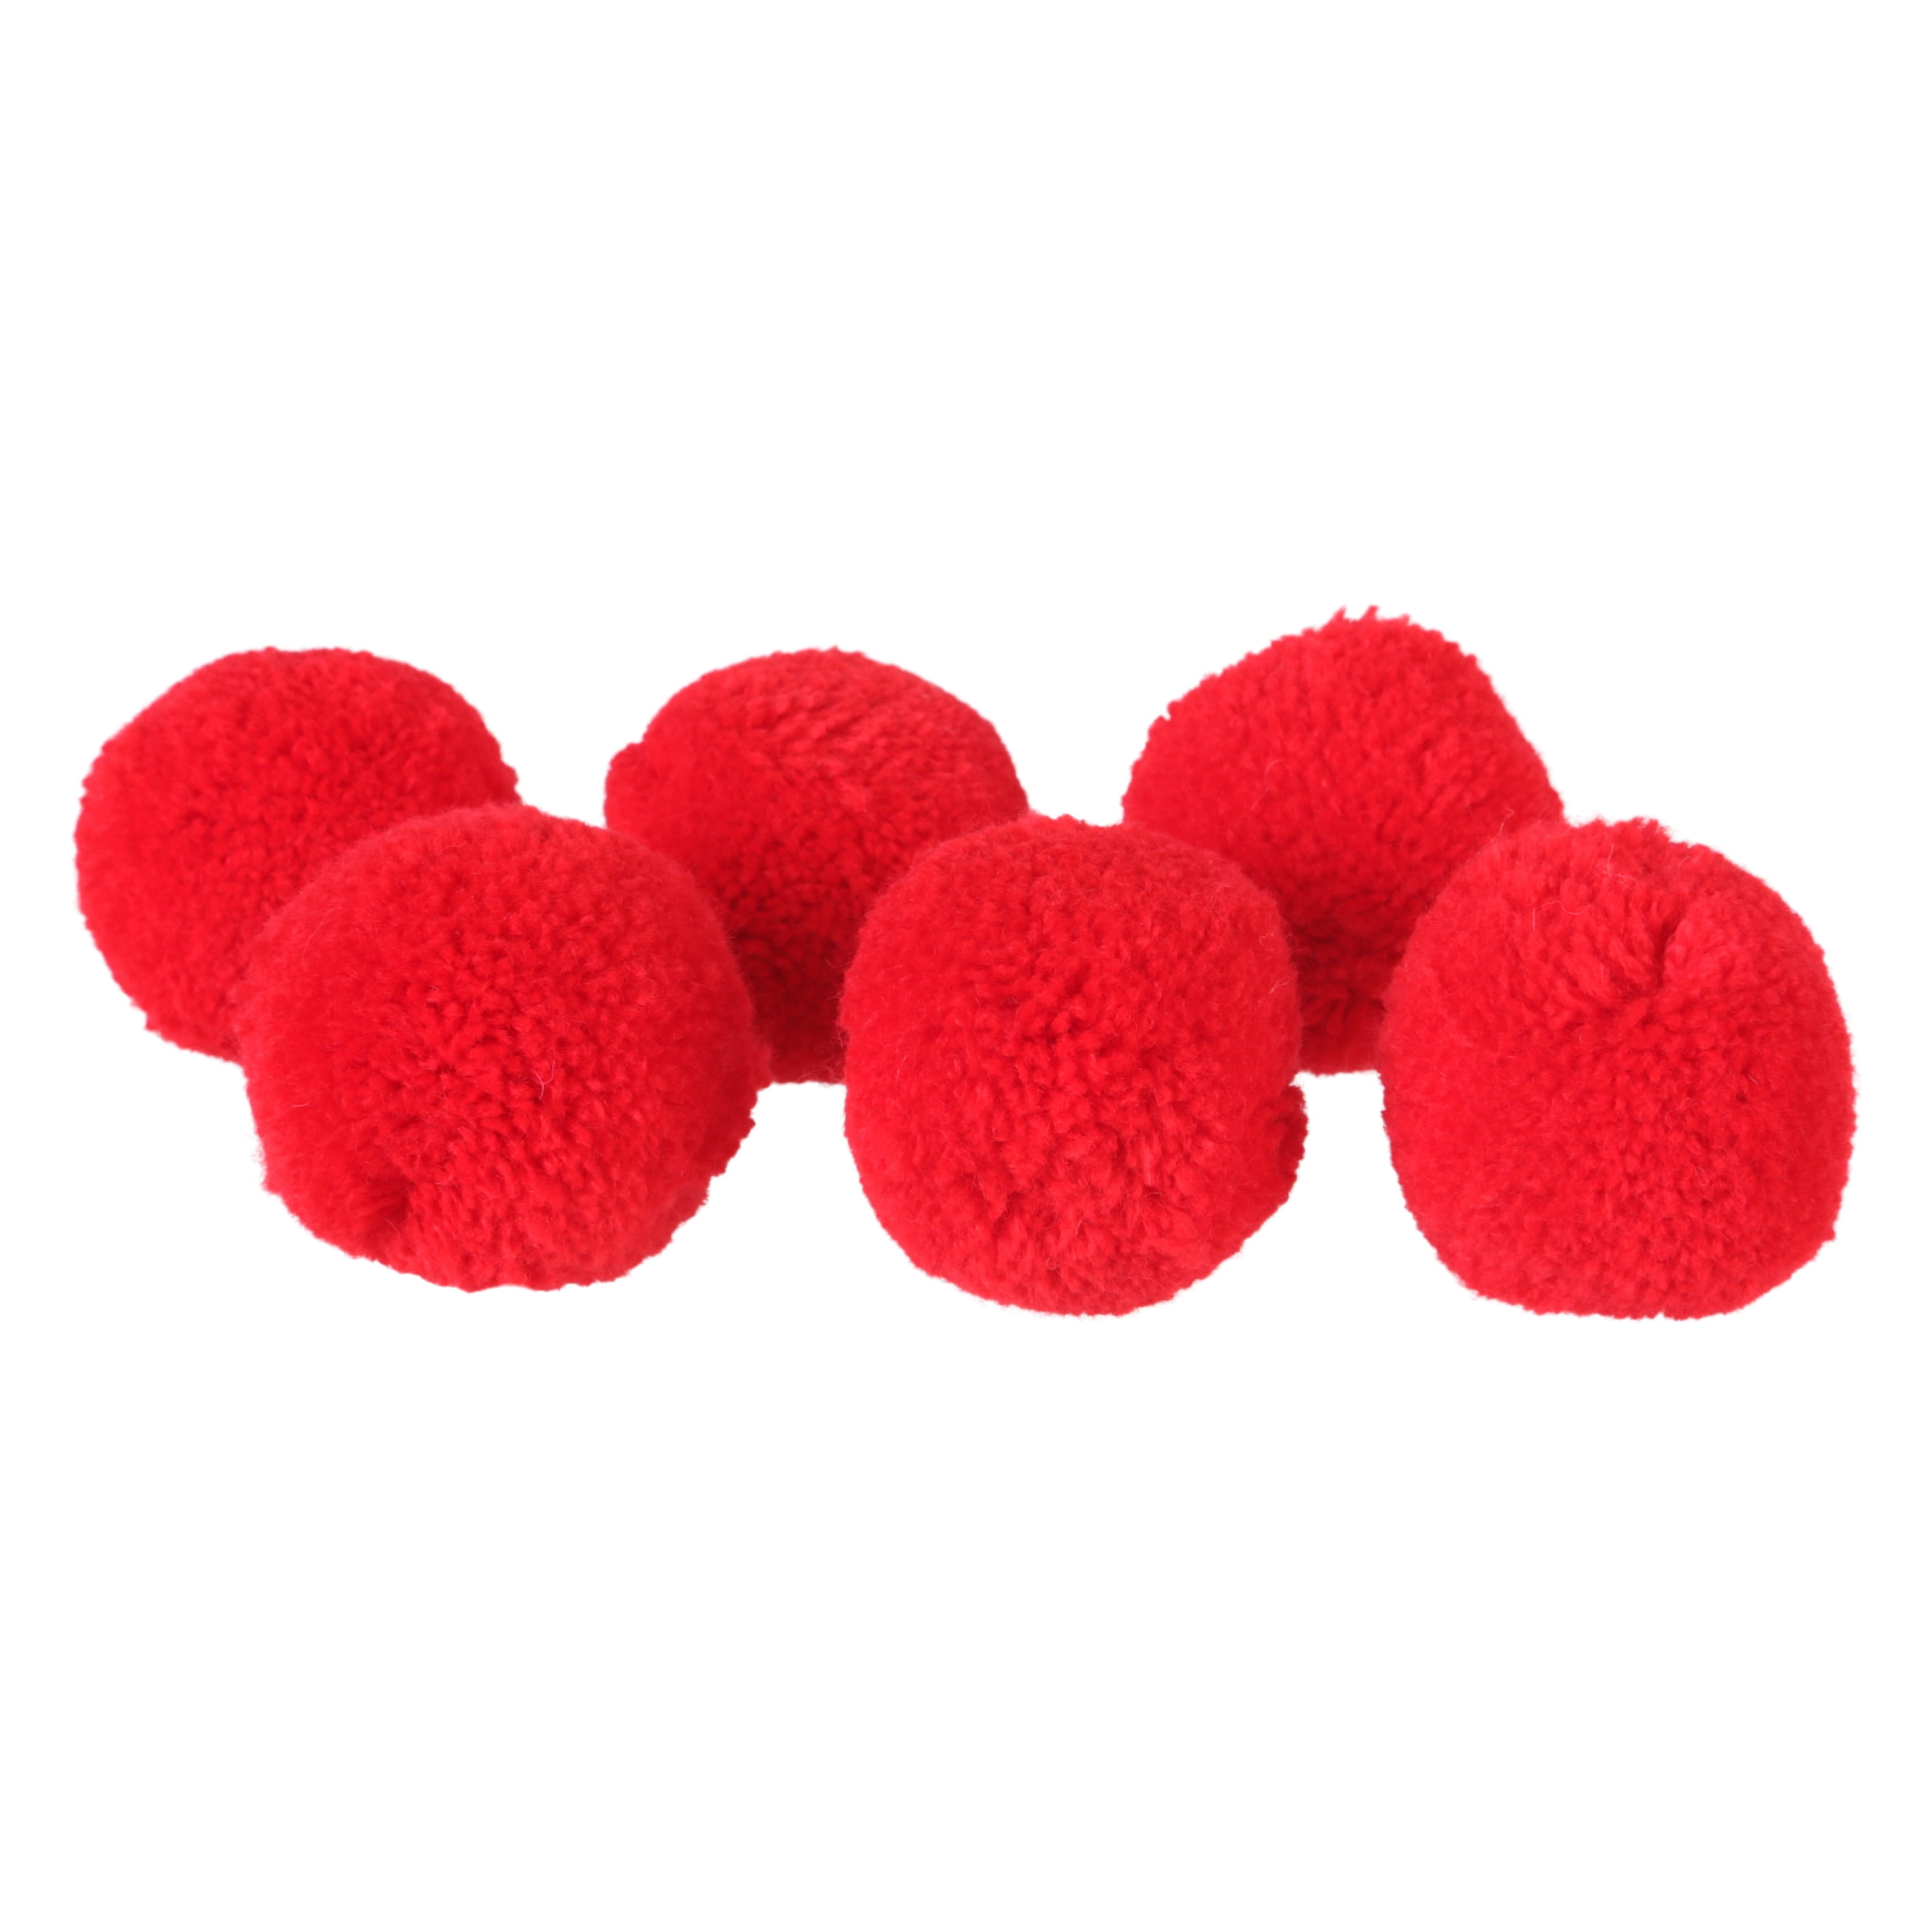 1/2 inch Red Mini Craft Pom Poms 100 Pieces